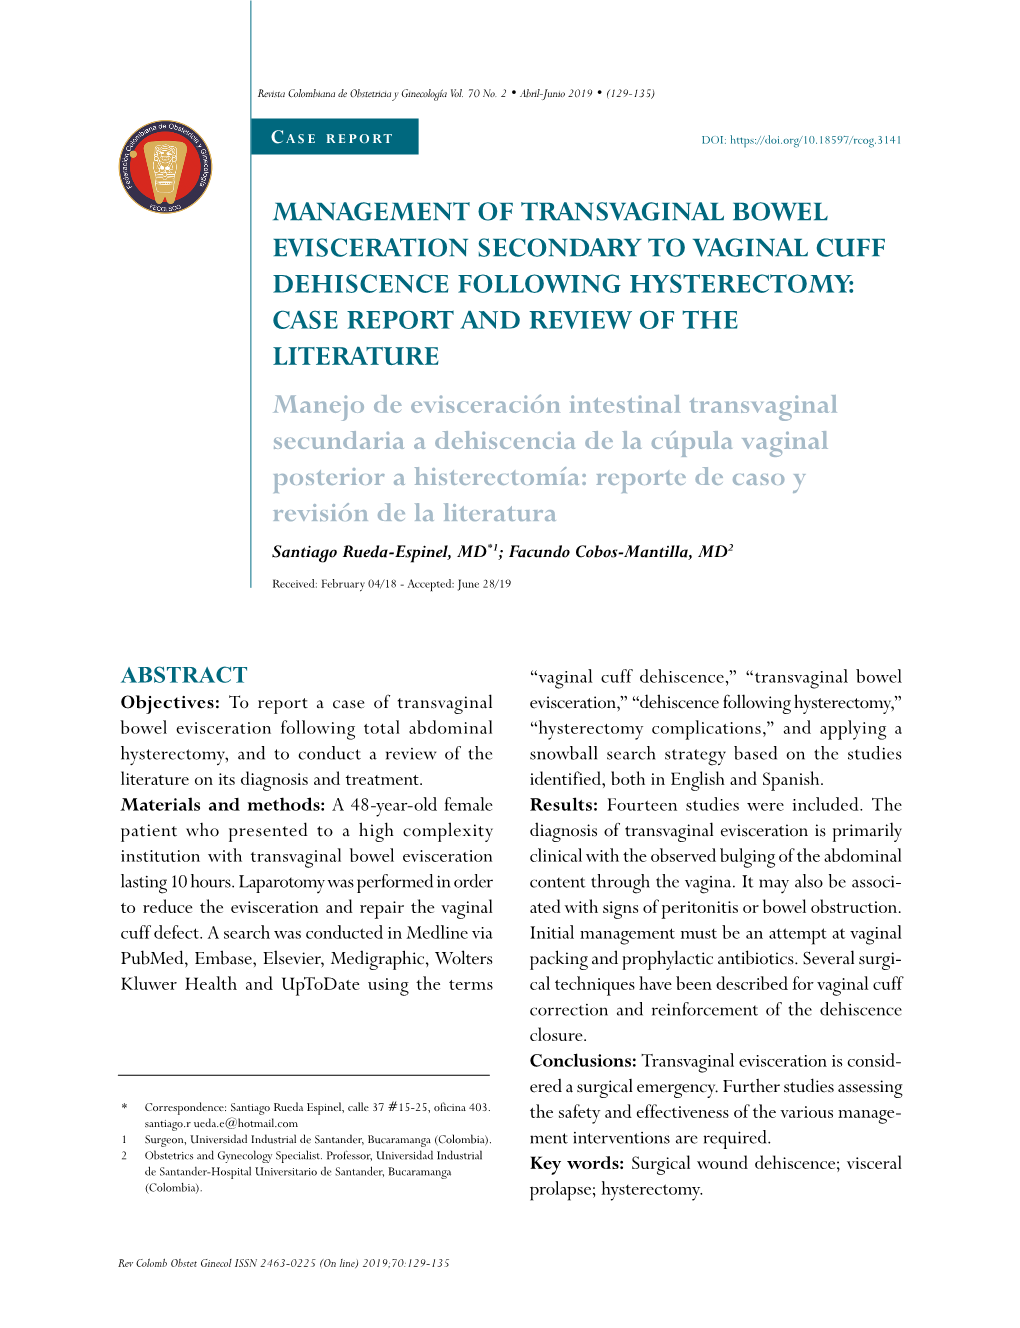 Management of Transvaginal Bowel